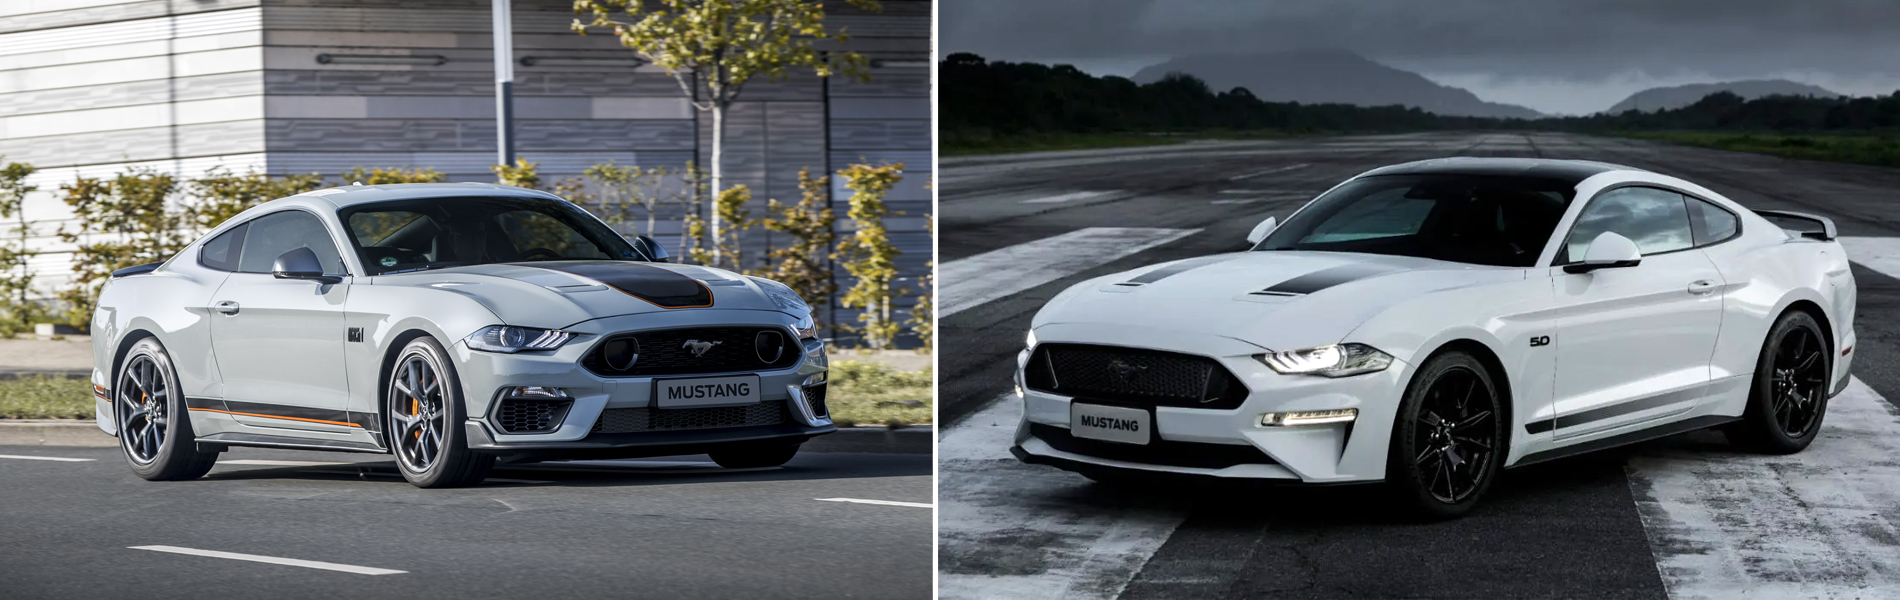 Mustang Mach1 vs Black Shadow